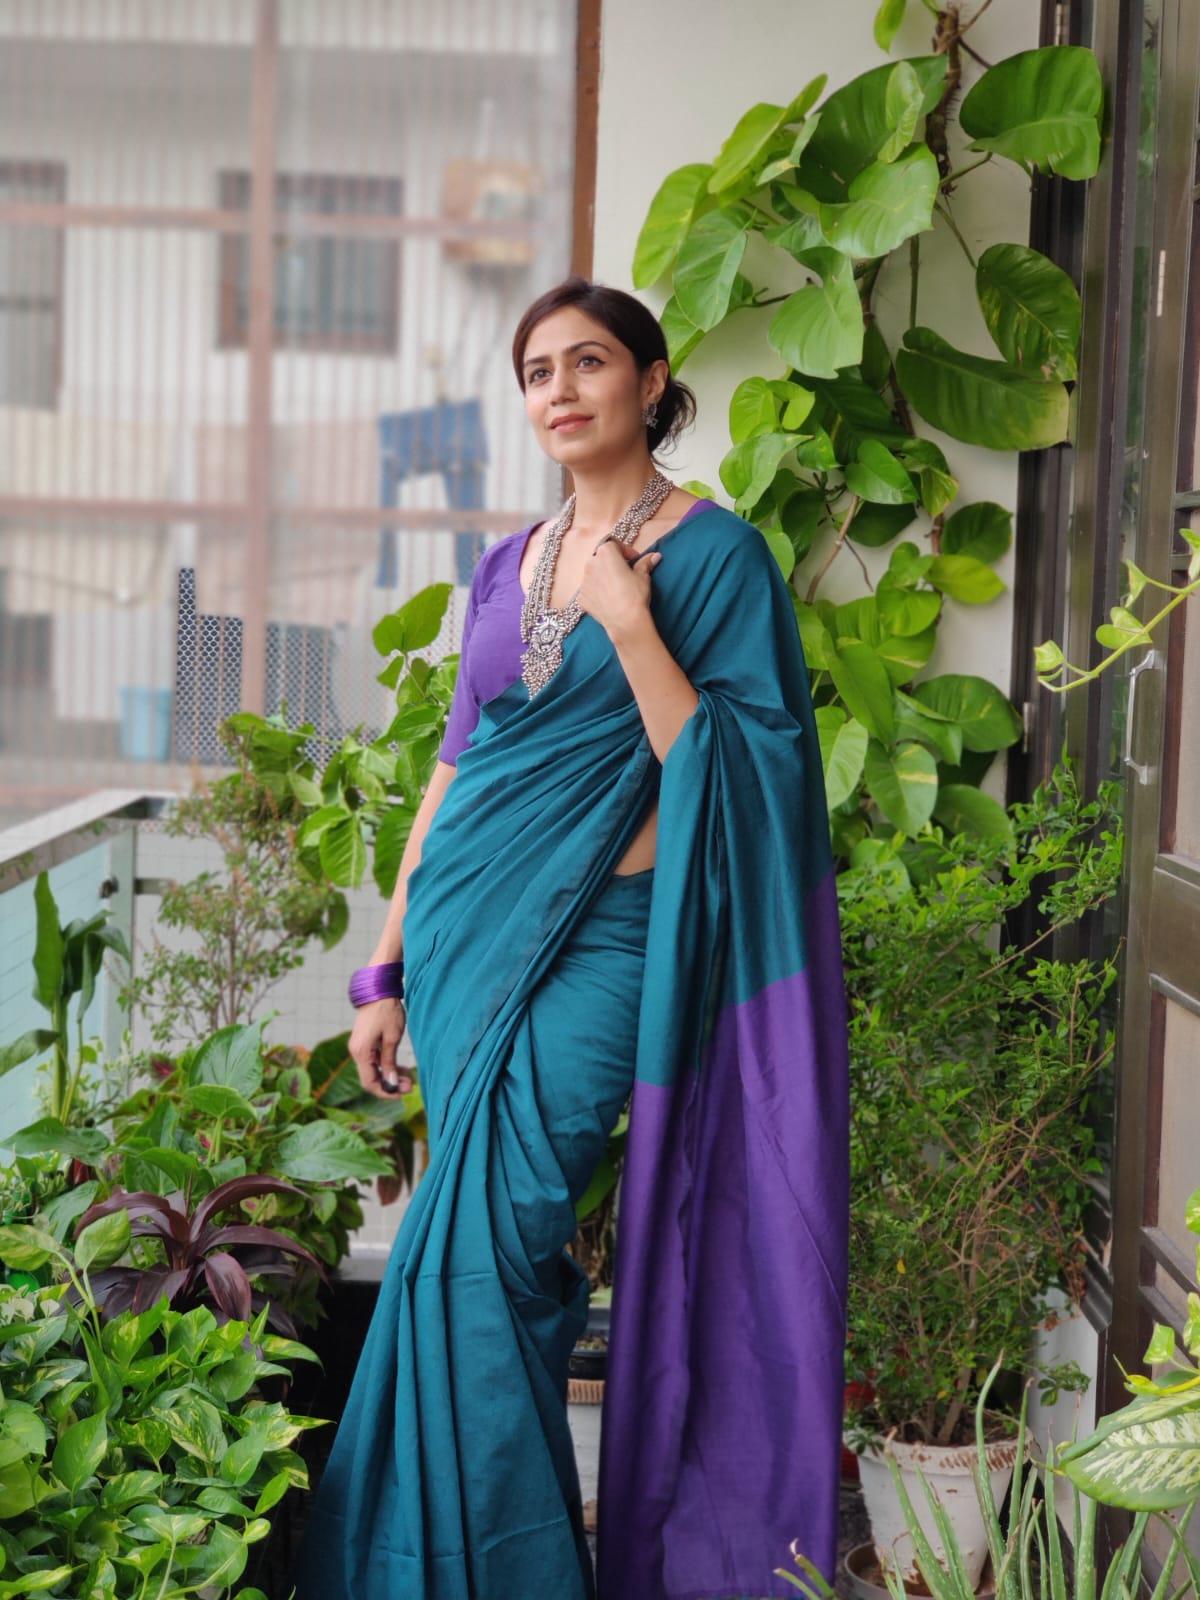 Sutisancha Purple & Rama Handwoven Khadi Saree - Suti Sancha